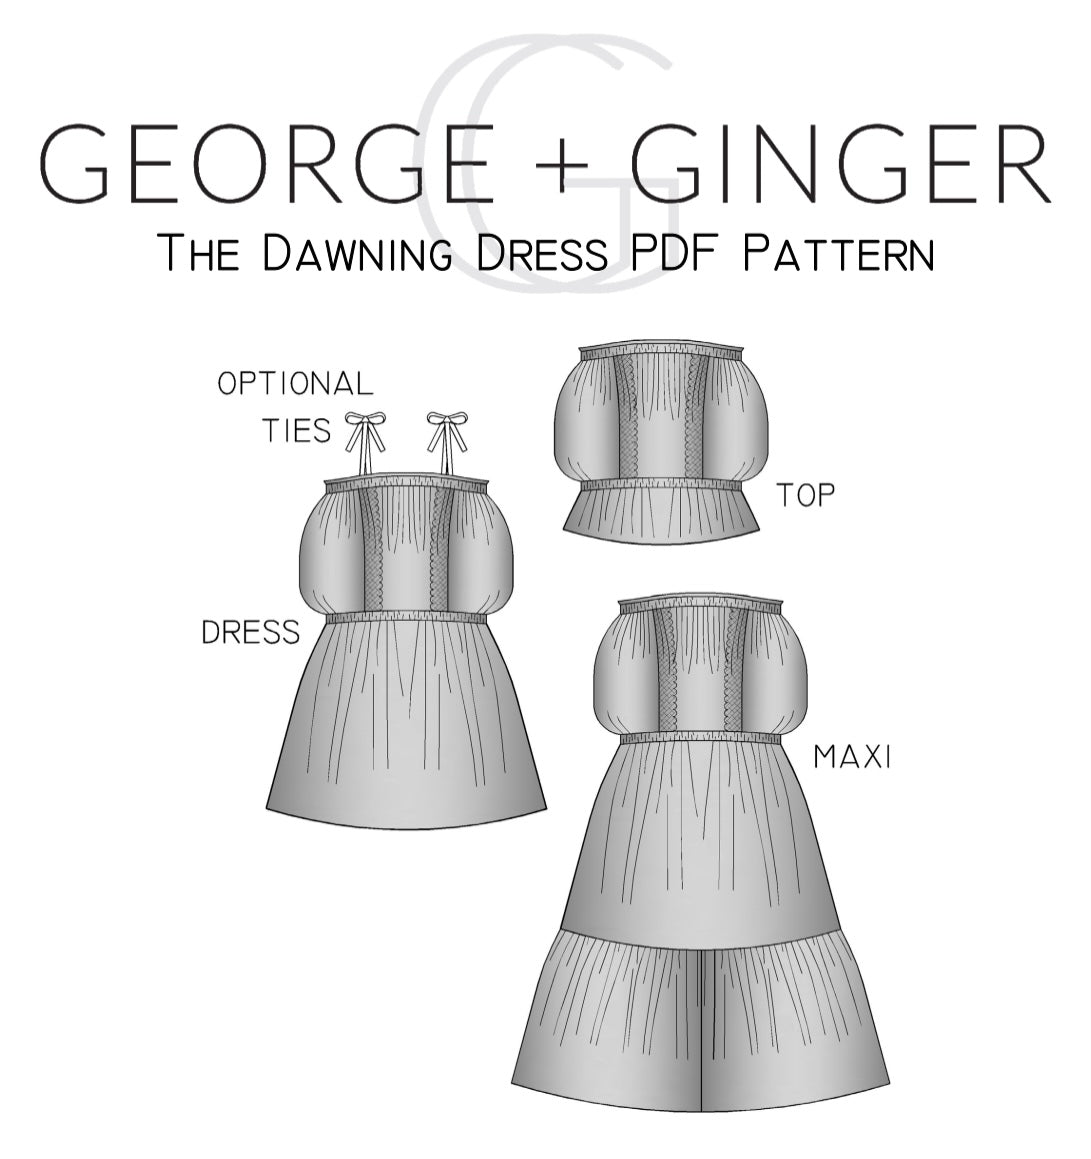 The Dawning Dress PDF Sewing Pattern